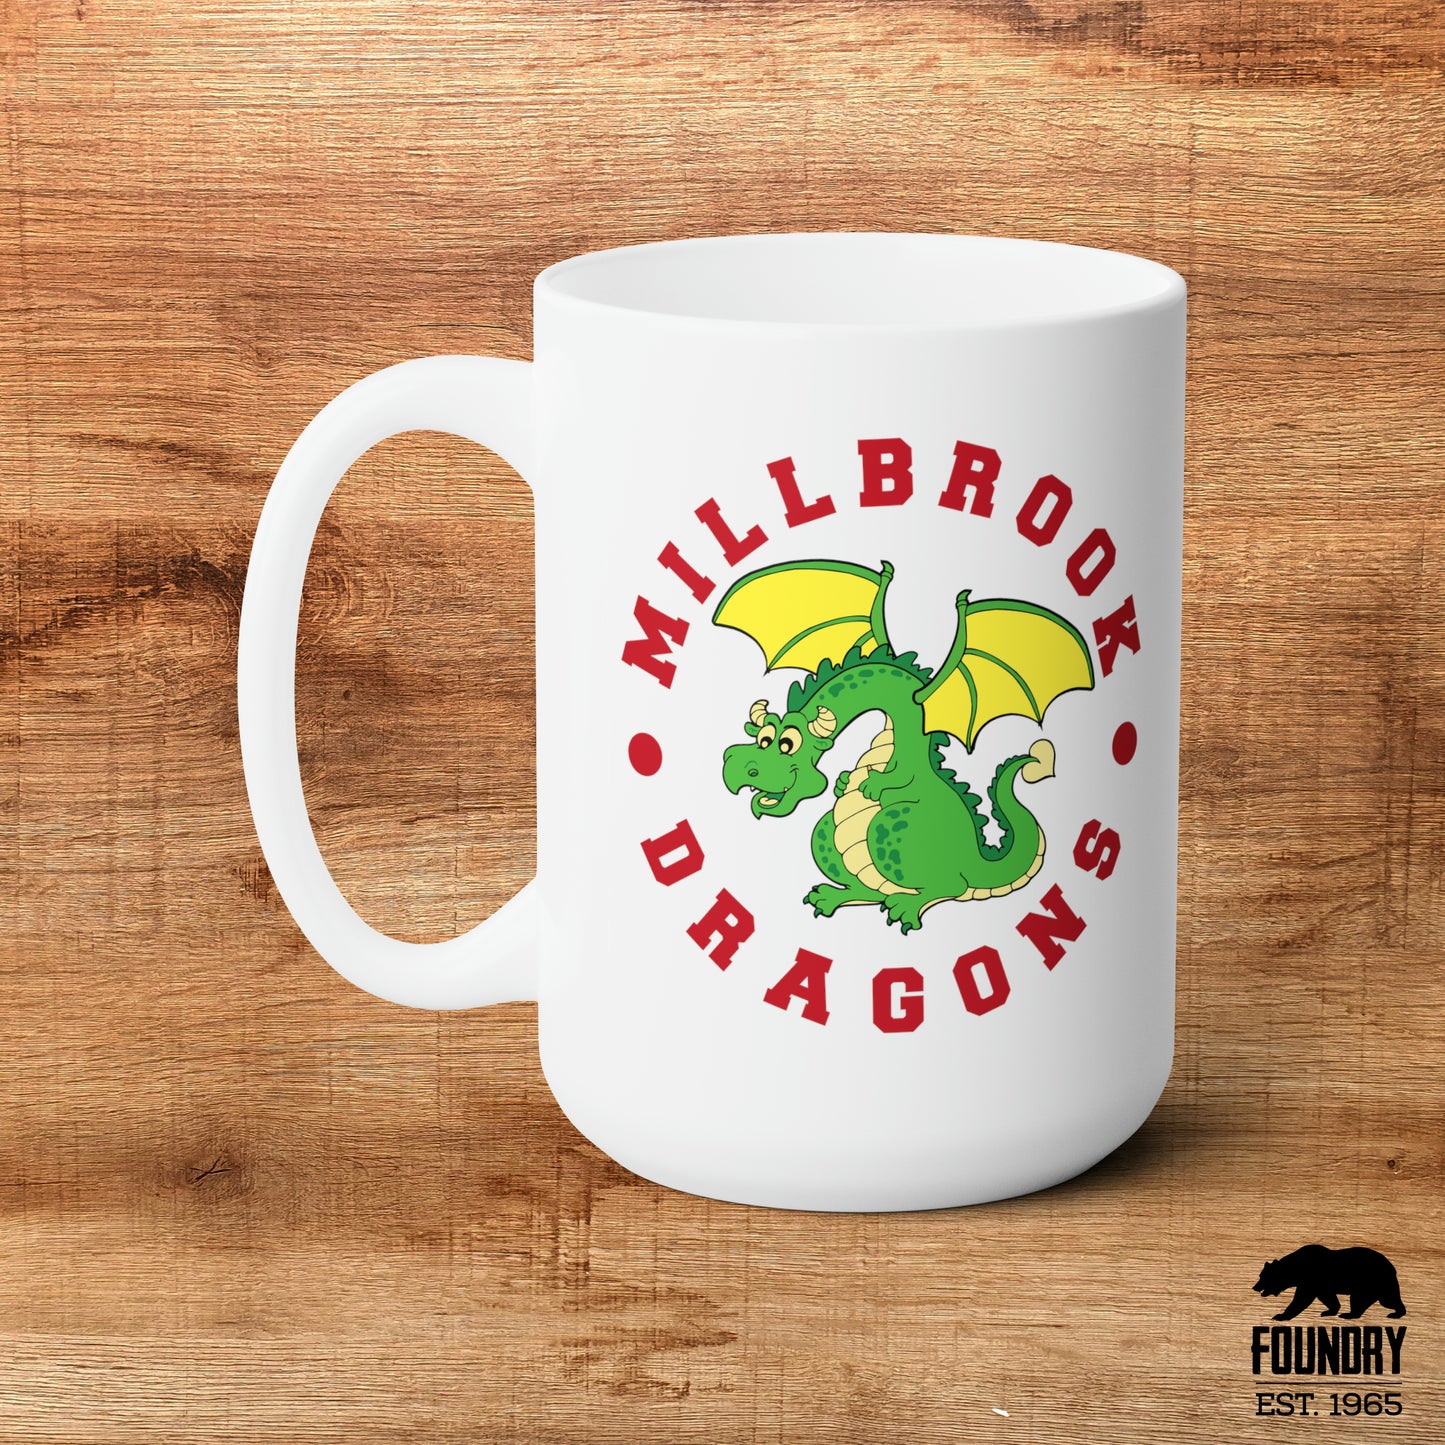 Millbrook Dragons Mascot - Ceramic Mug 15oz